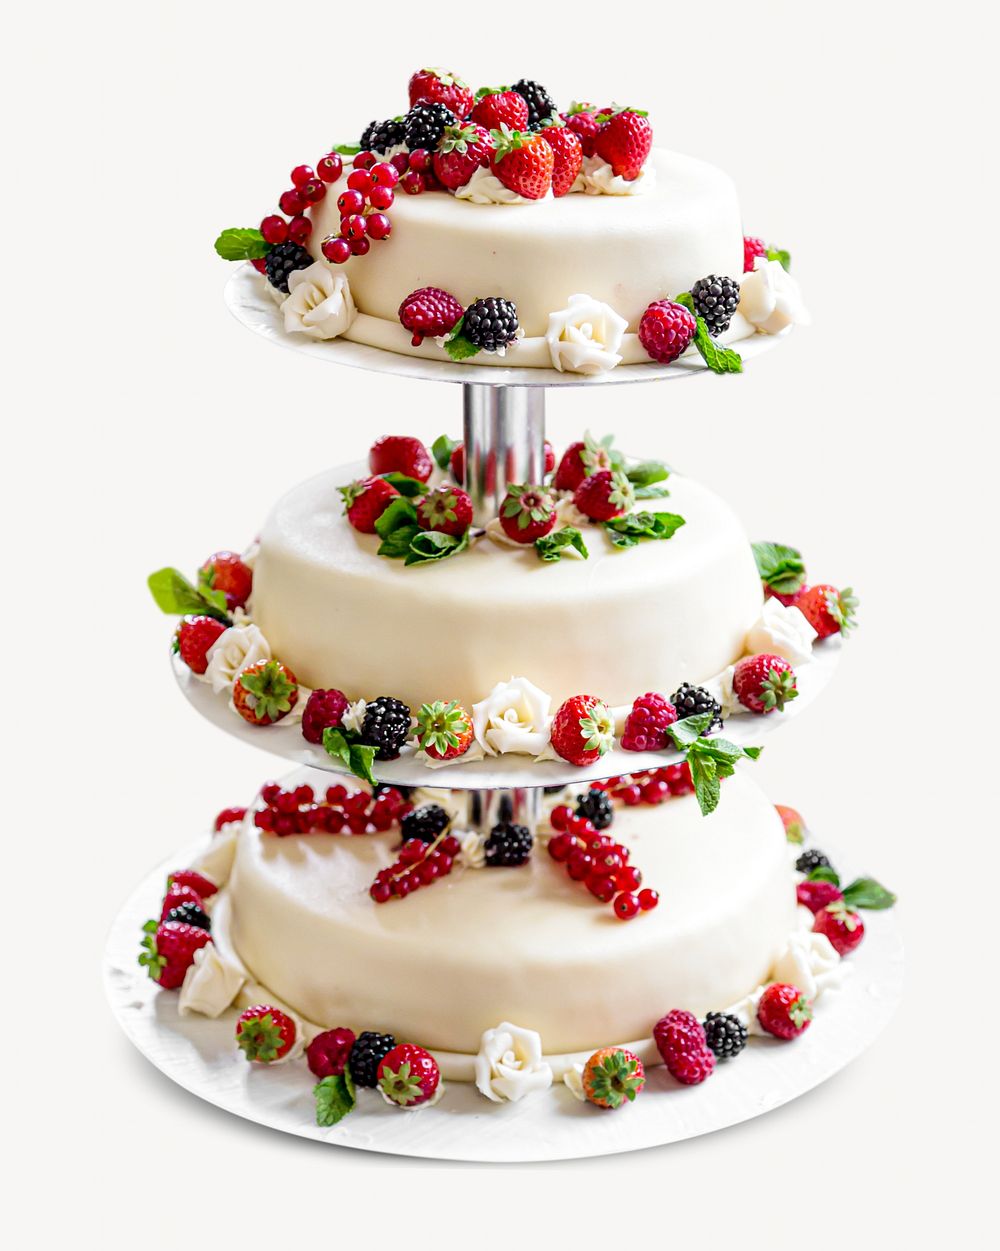 Berry wedding cake collage element, isolated image